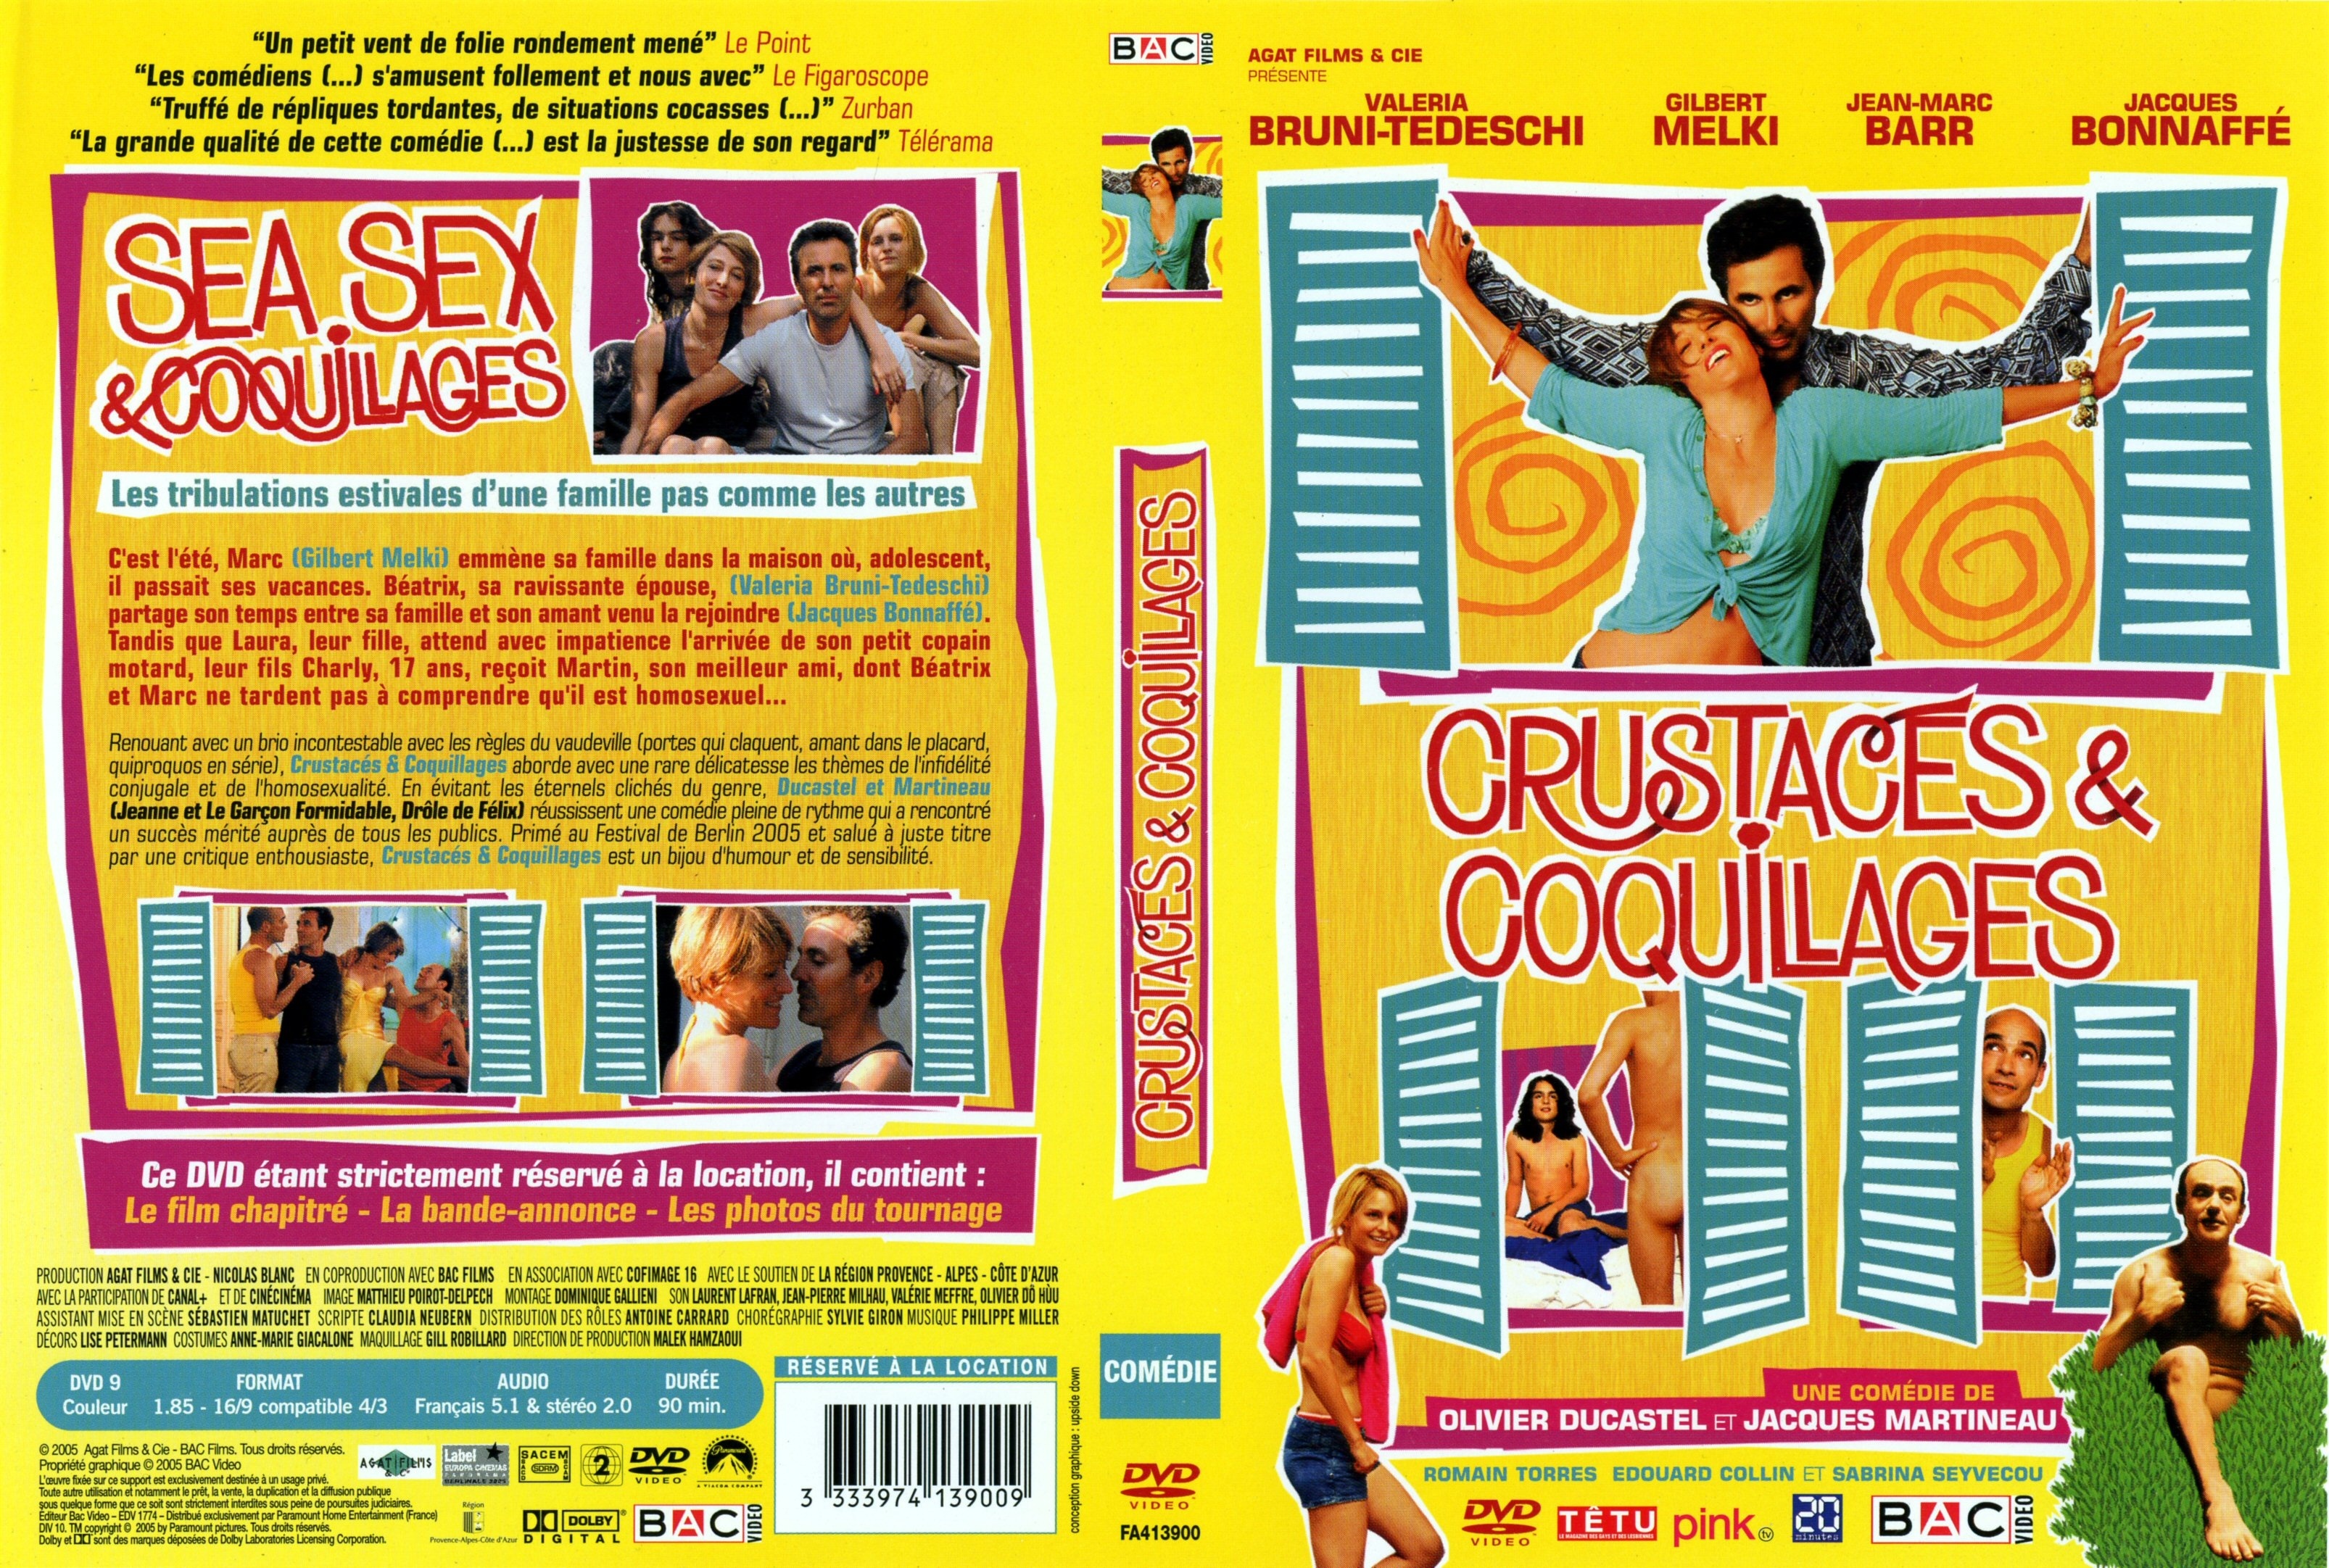 Jaquette DVD Crustacs et coquillages